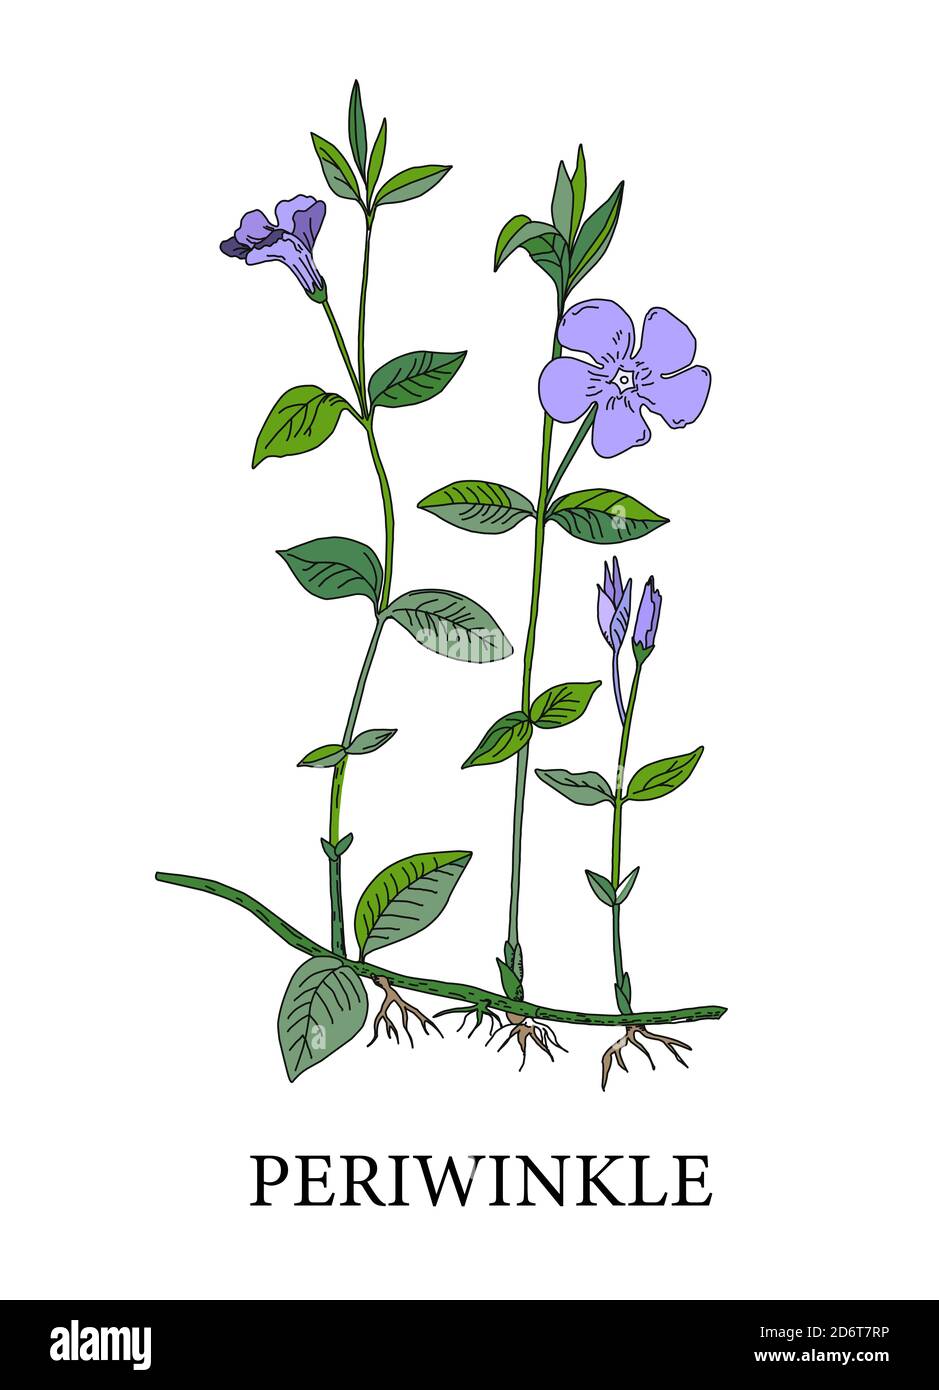 Periwinkle flower. Botanical illustration of periwinkles. Medicinal plants. Alternative medicine. Blue flower on a white background. illustration. Stock Photo